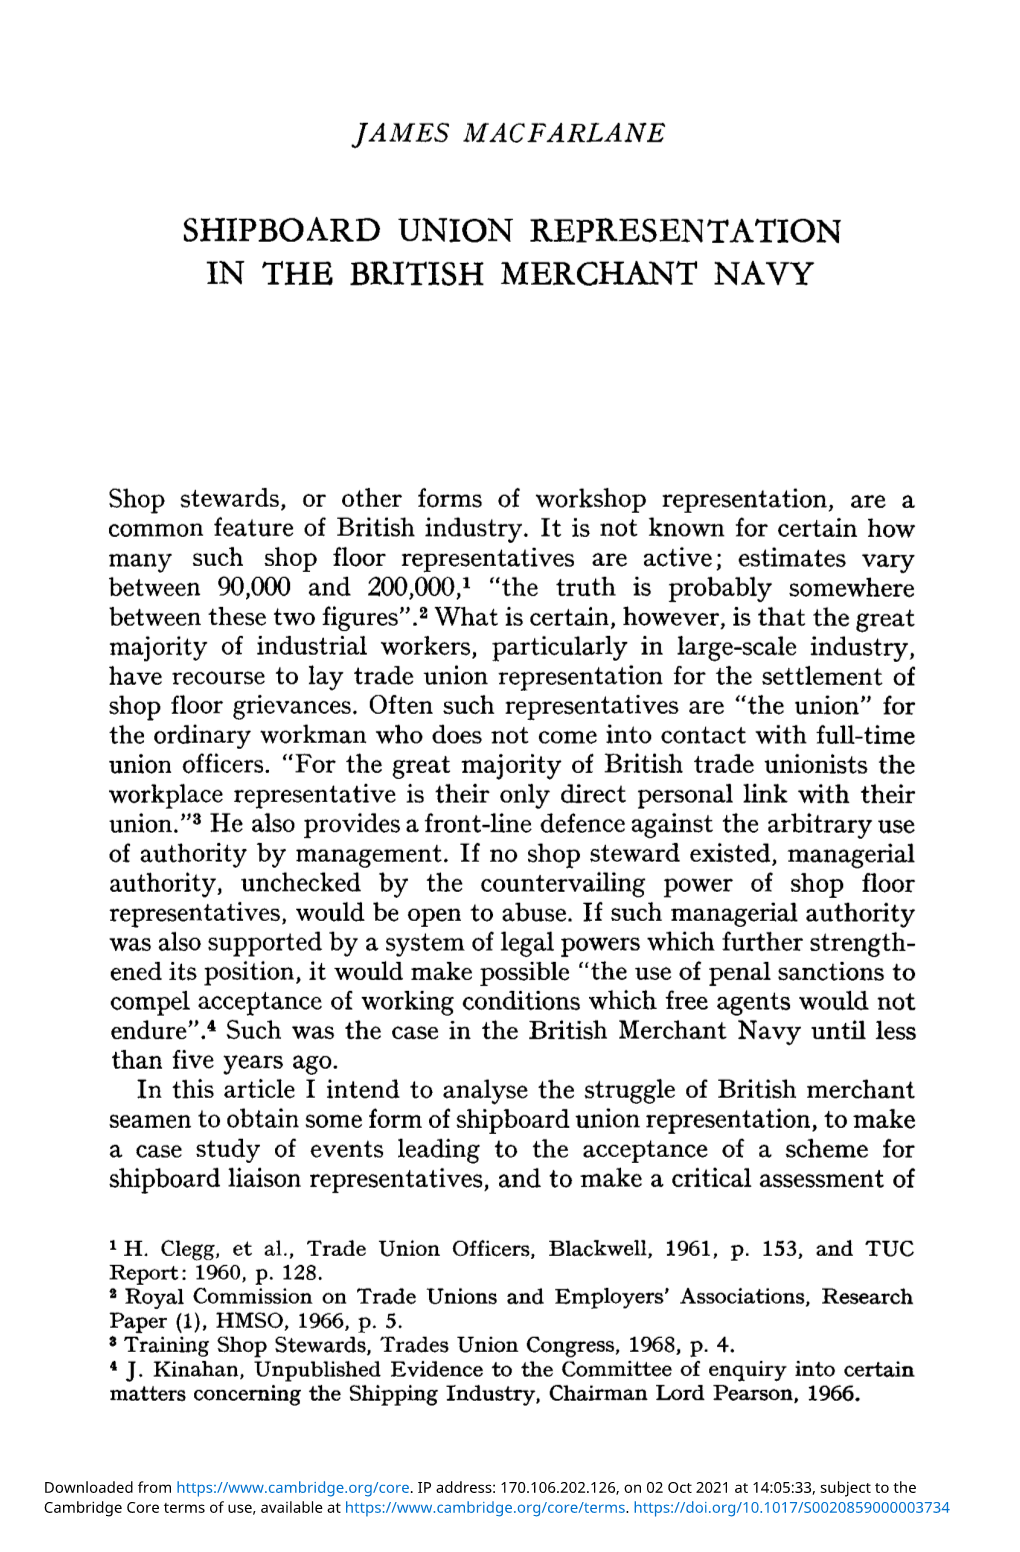 Shipboard Union Representation in the British Merchant Navy